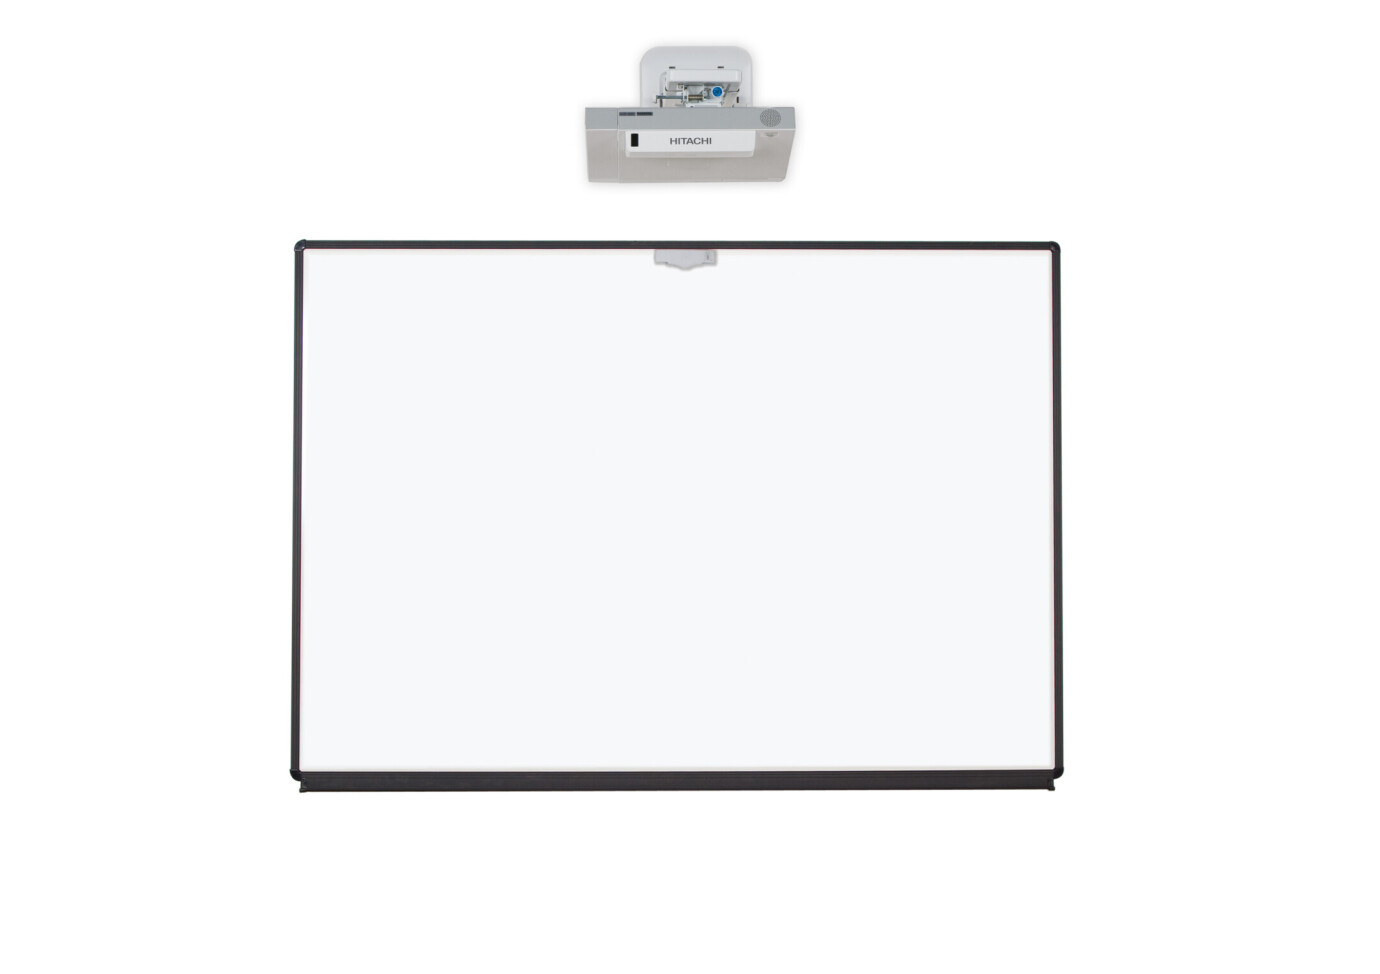 celexon Whiteboard Projektions-Schreibtafel Expert 192 x 120 cm PEN